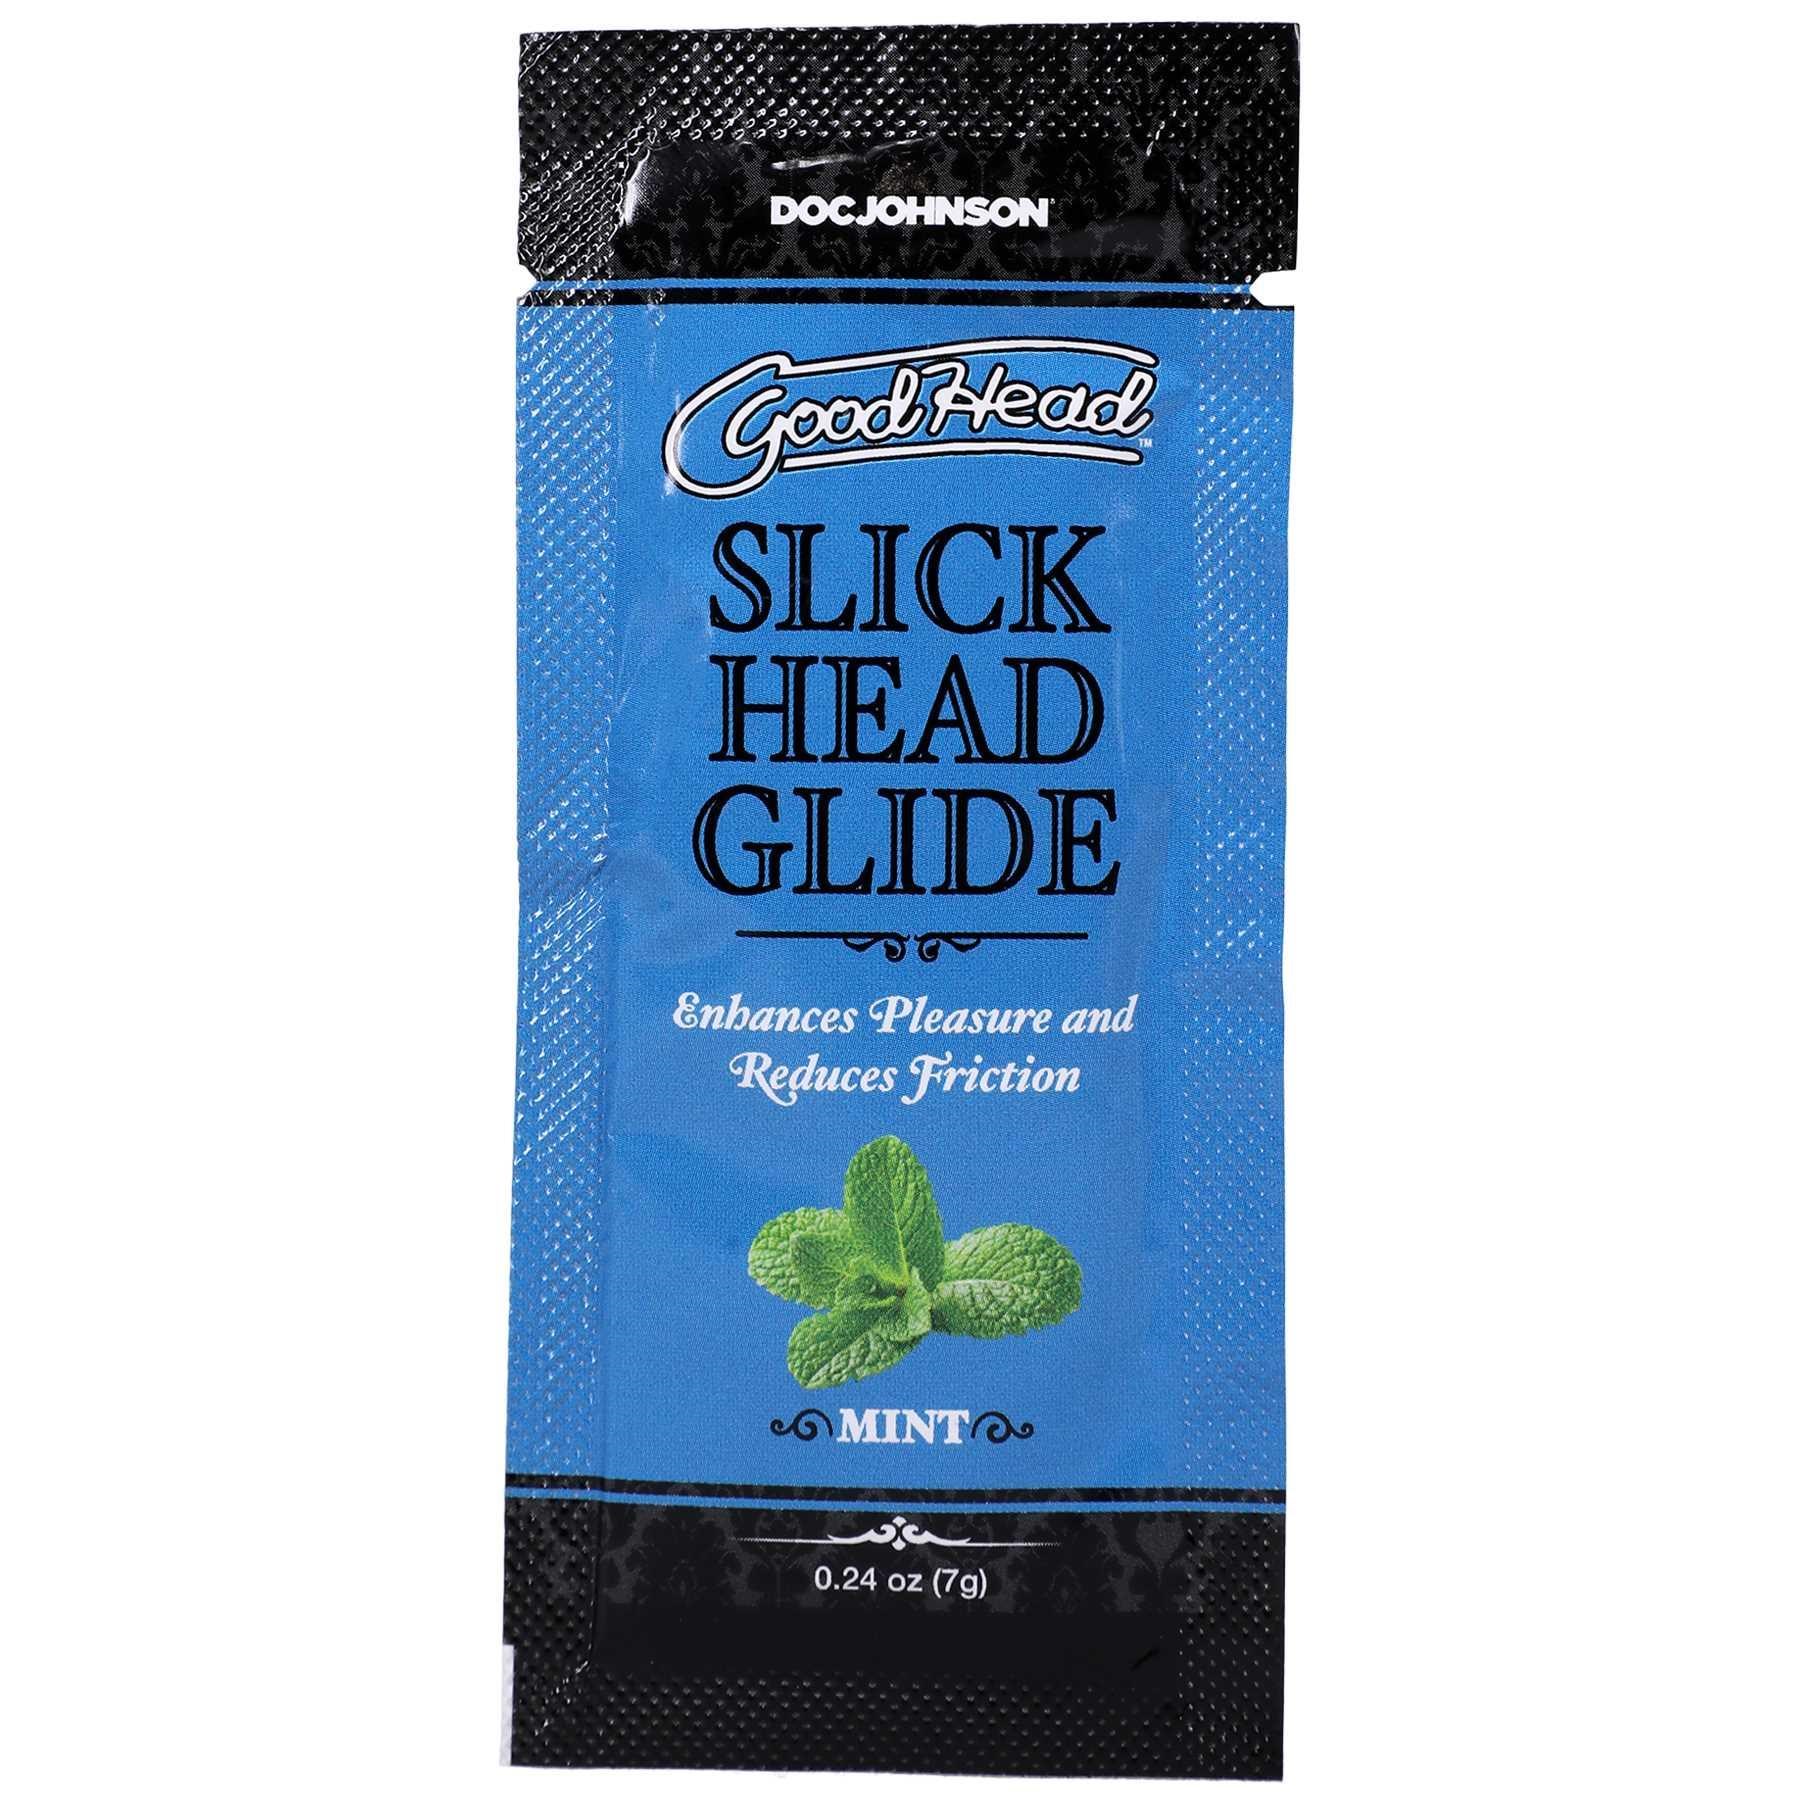 GoodHead - Slick Head Glide -mint front of package-  0.24 oz.